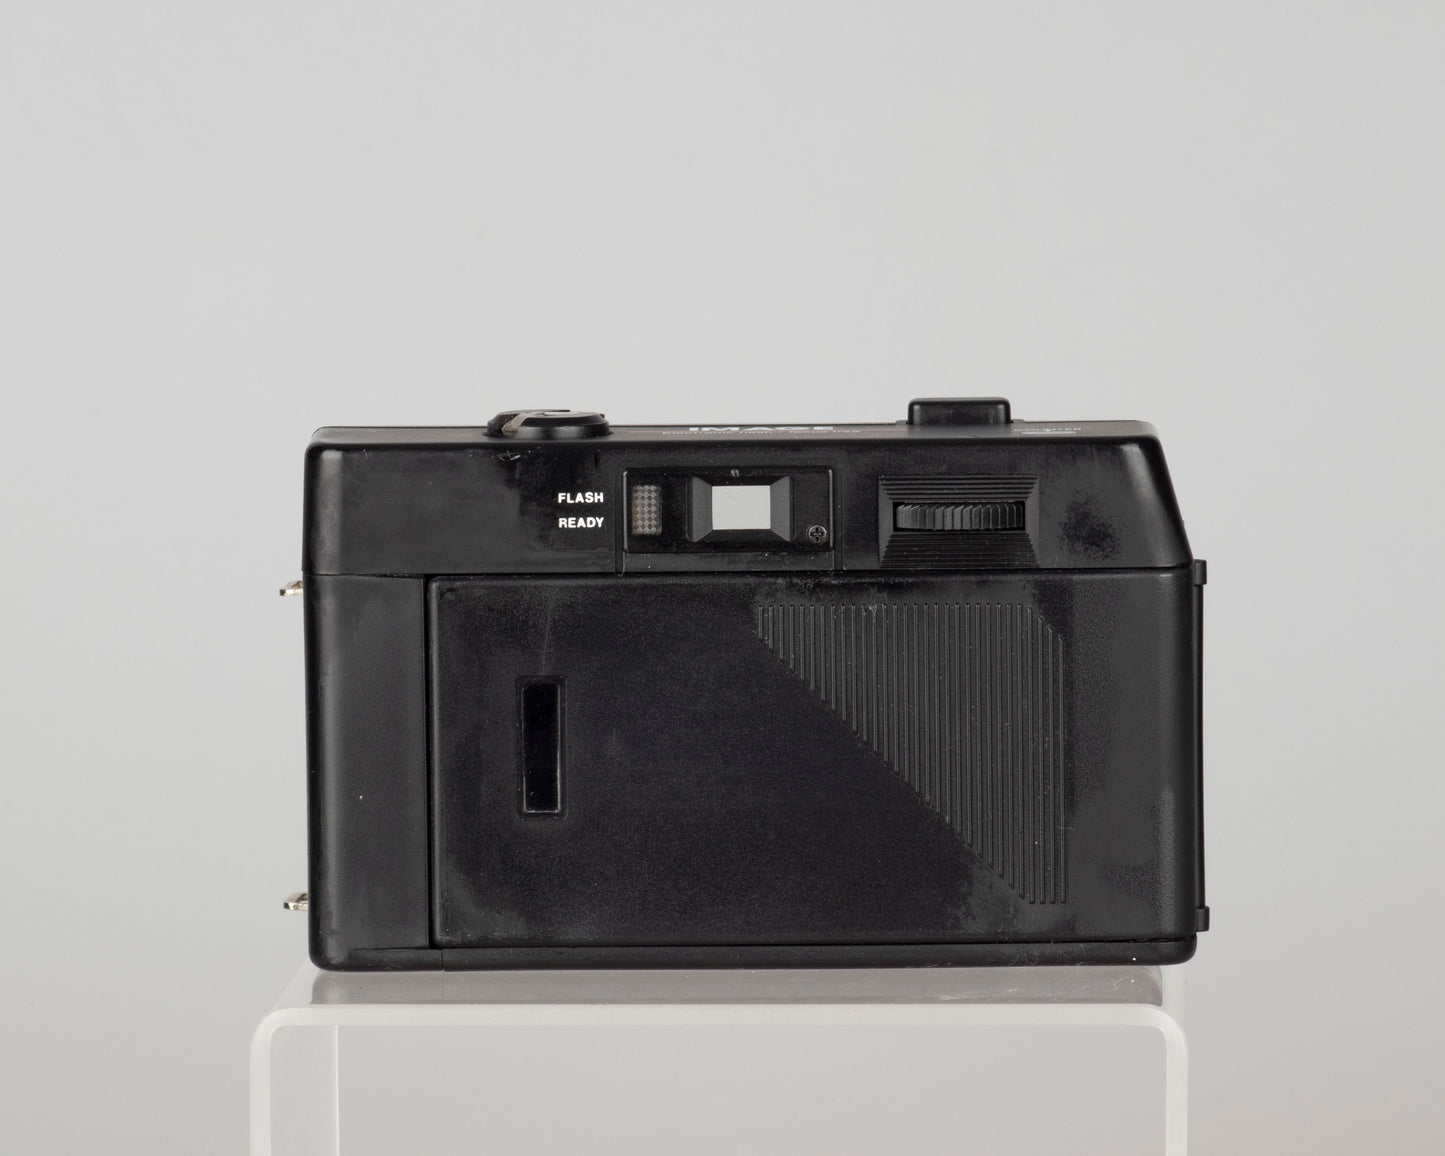 Image GF35 35mm camera (black version)